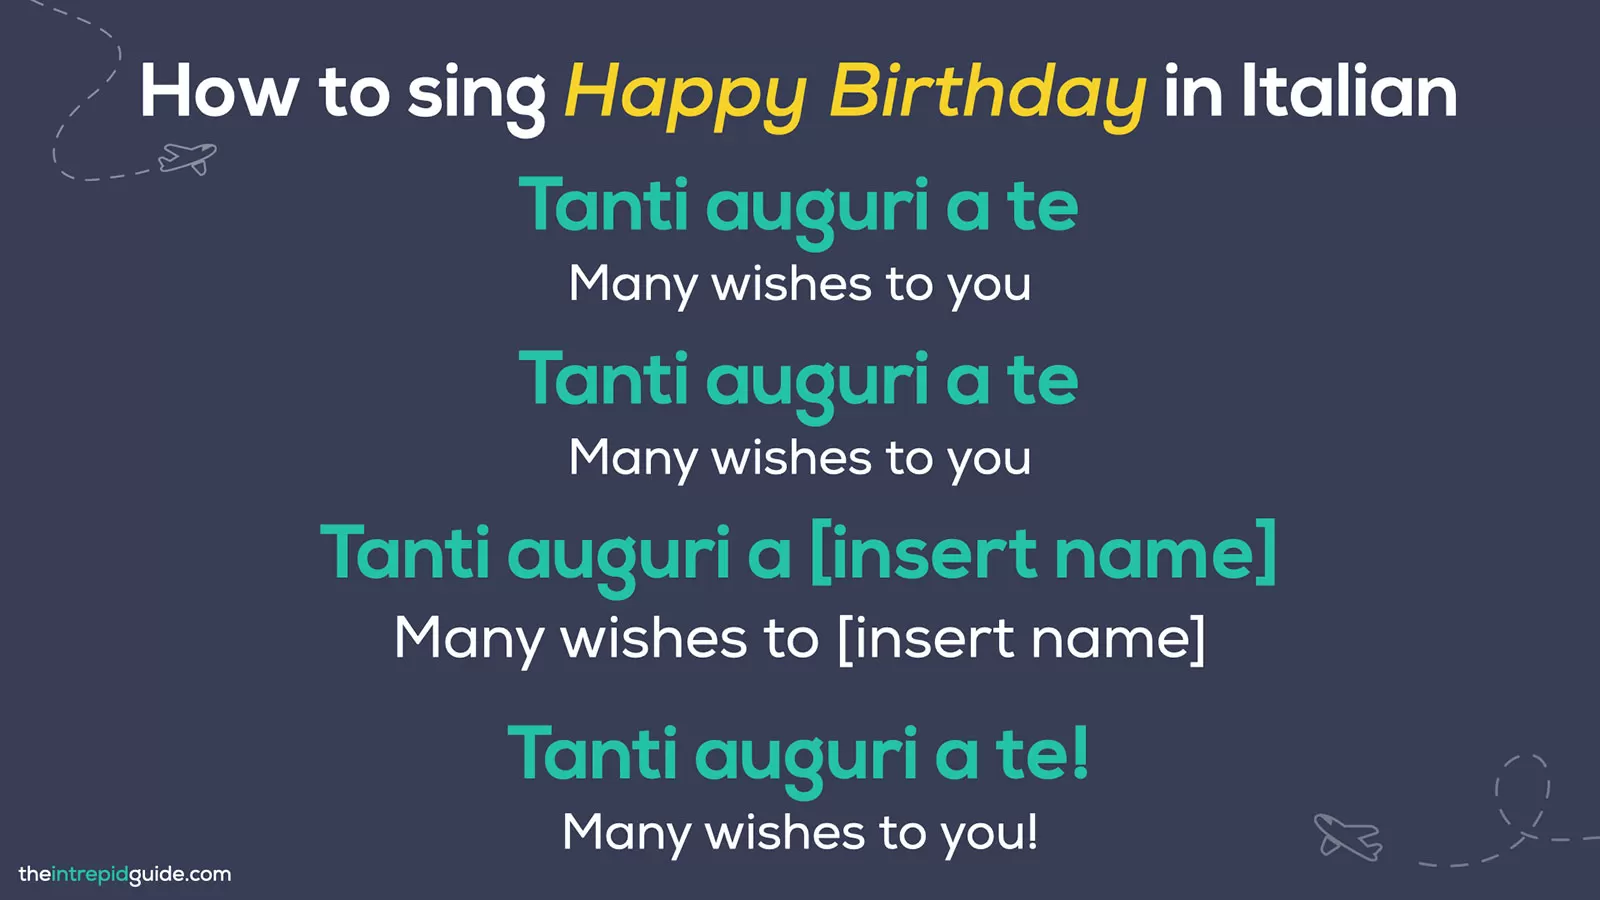 Happy Birthday in Italian - Lyrics to Happy Birthday song in Italian